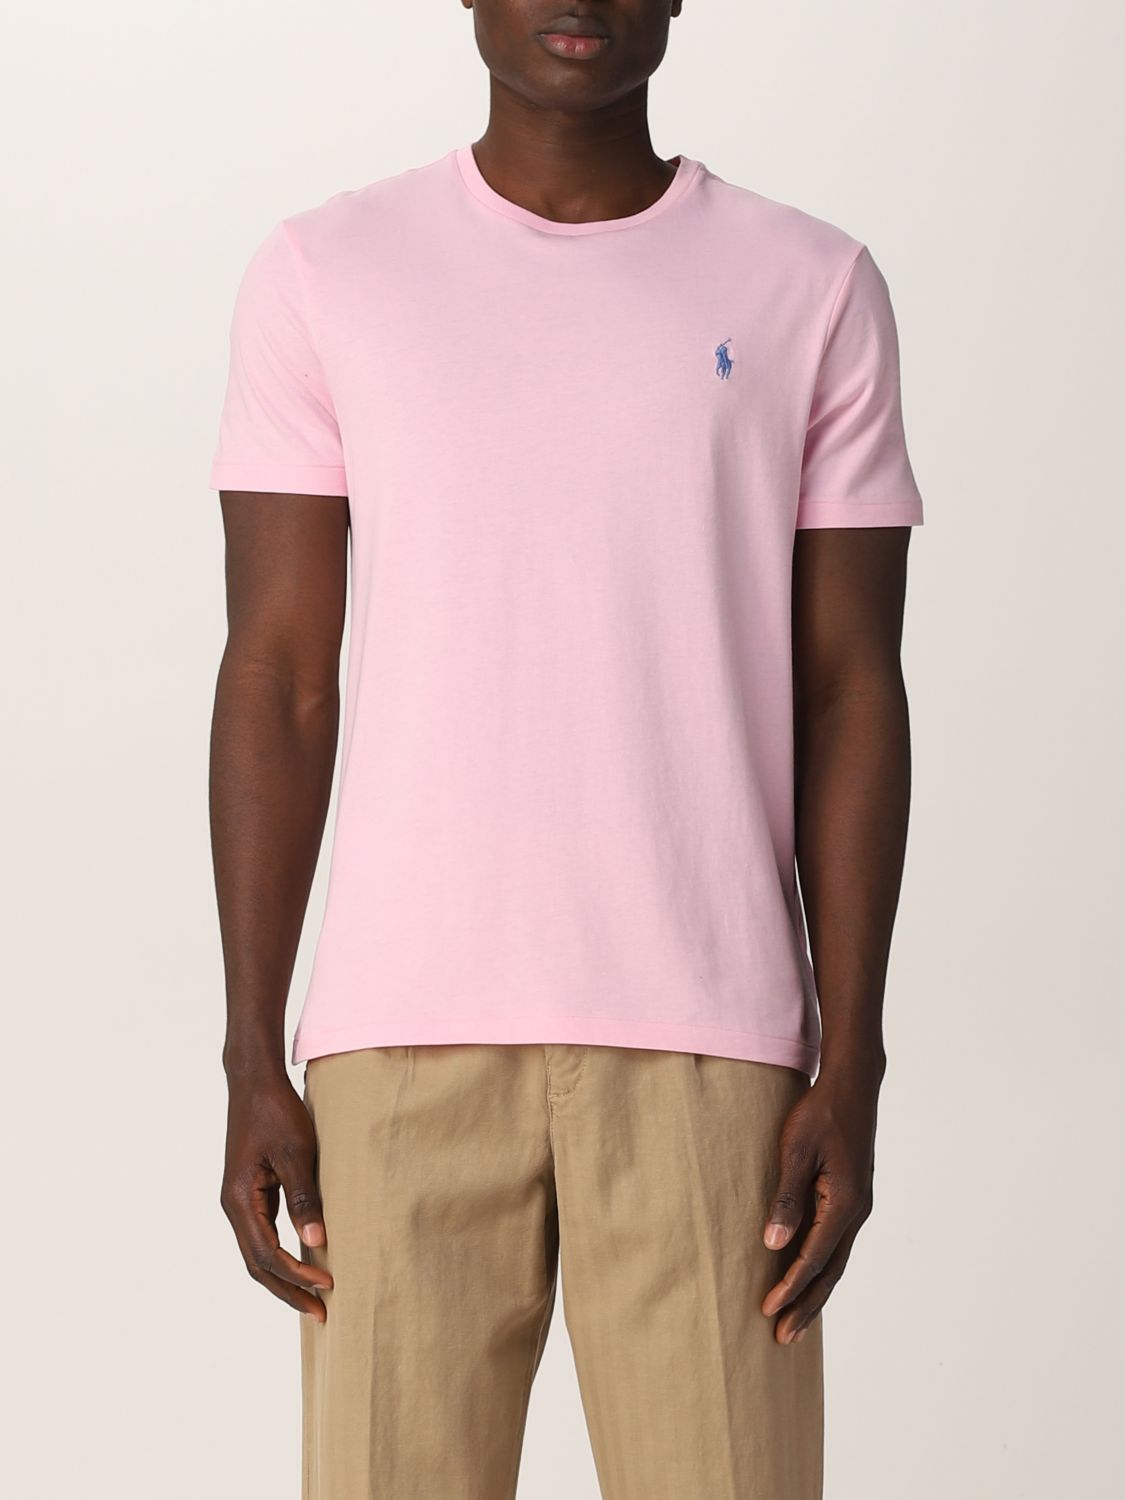 POLO RALPH LAUREN: cotton t-shirt with logo - Pink | Polo Ralph Lauren t- shirt 710671438 online on 